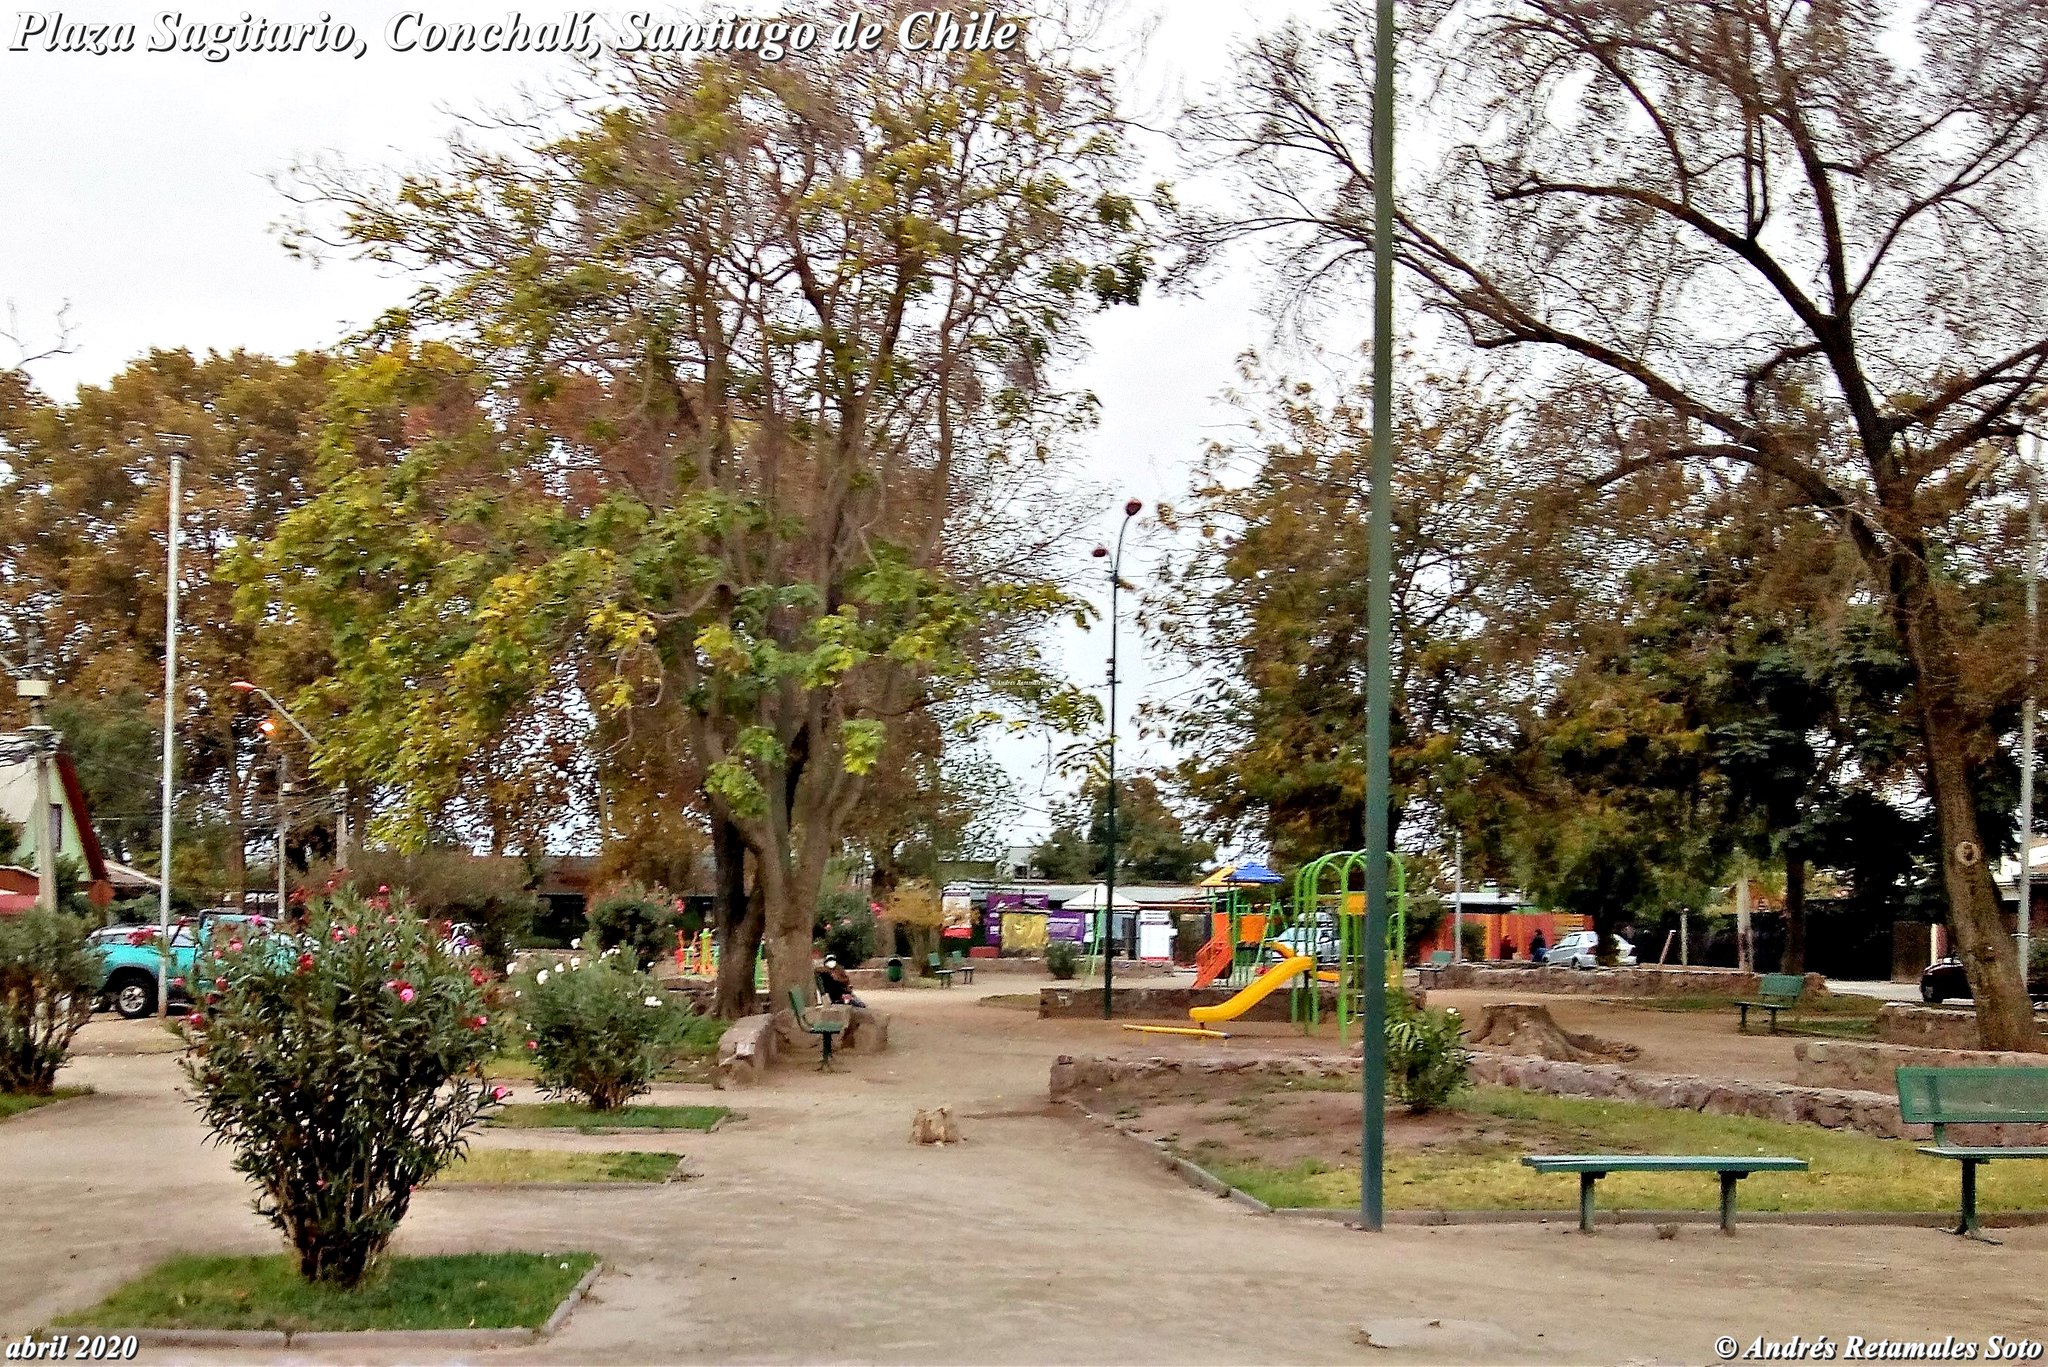 Plaza Sagitario, Conchalí, Santiago de Chile, abril 2020. 🌳🆑 #Conchalí #Chile